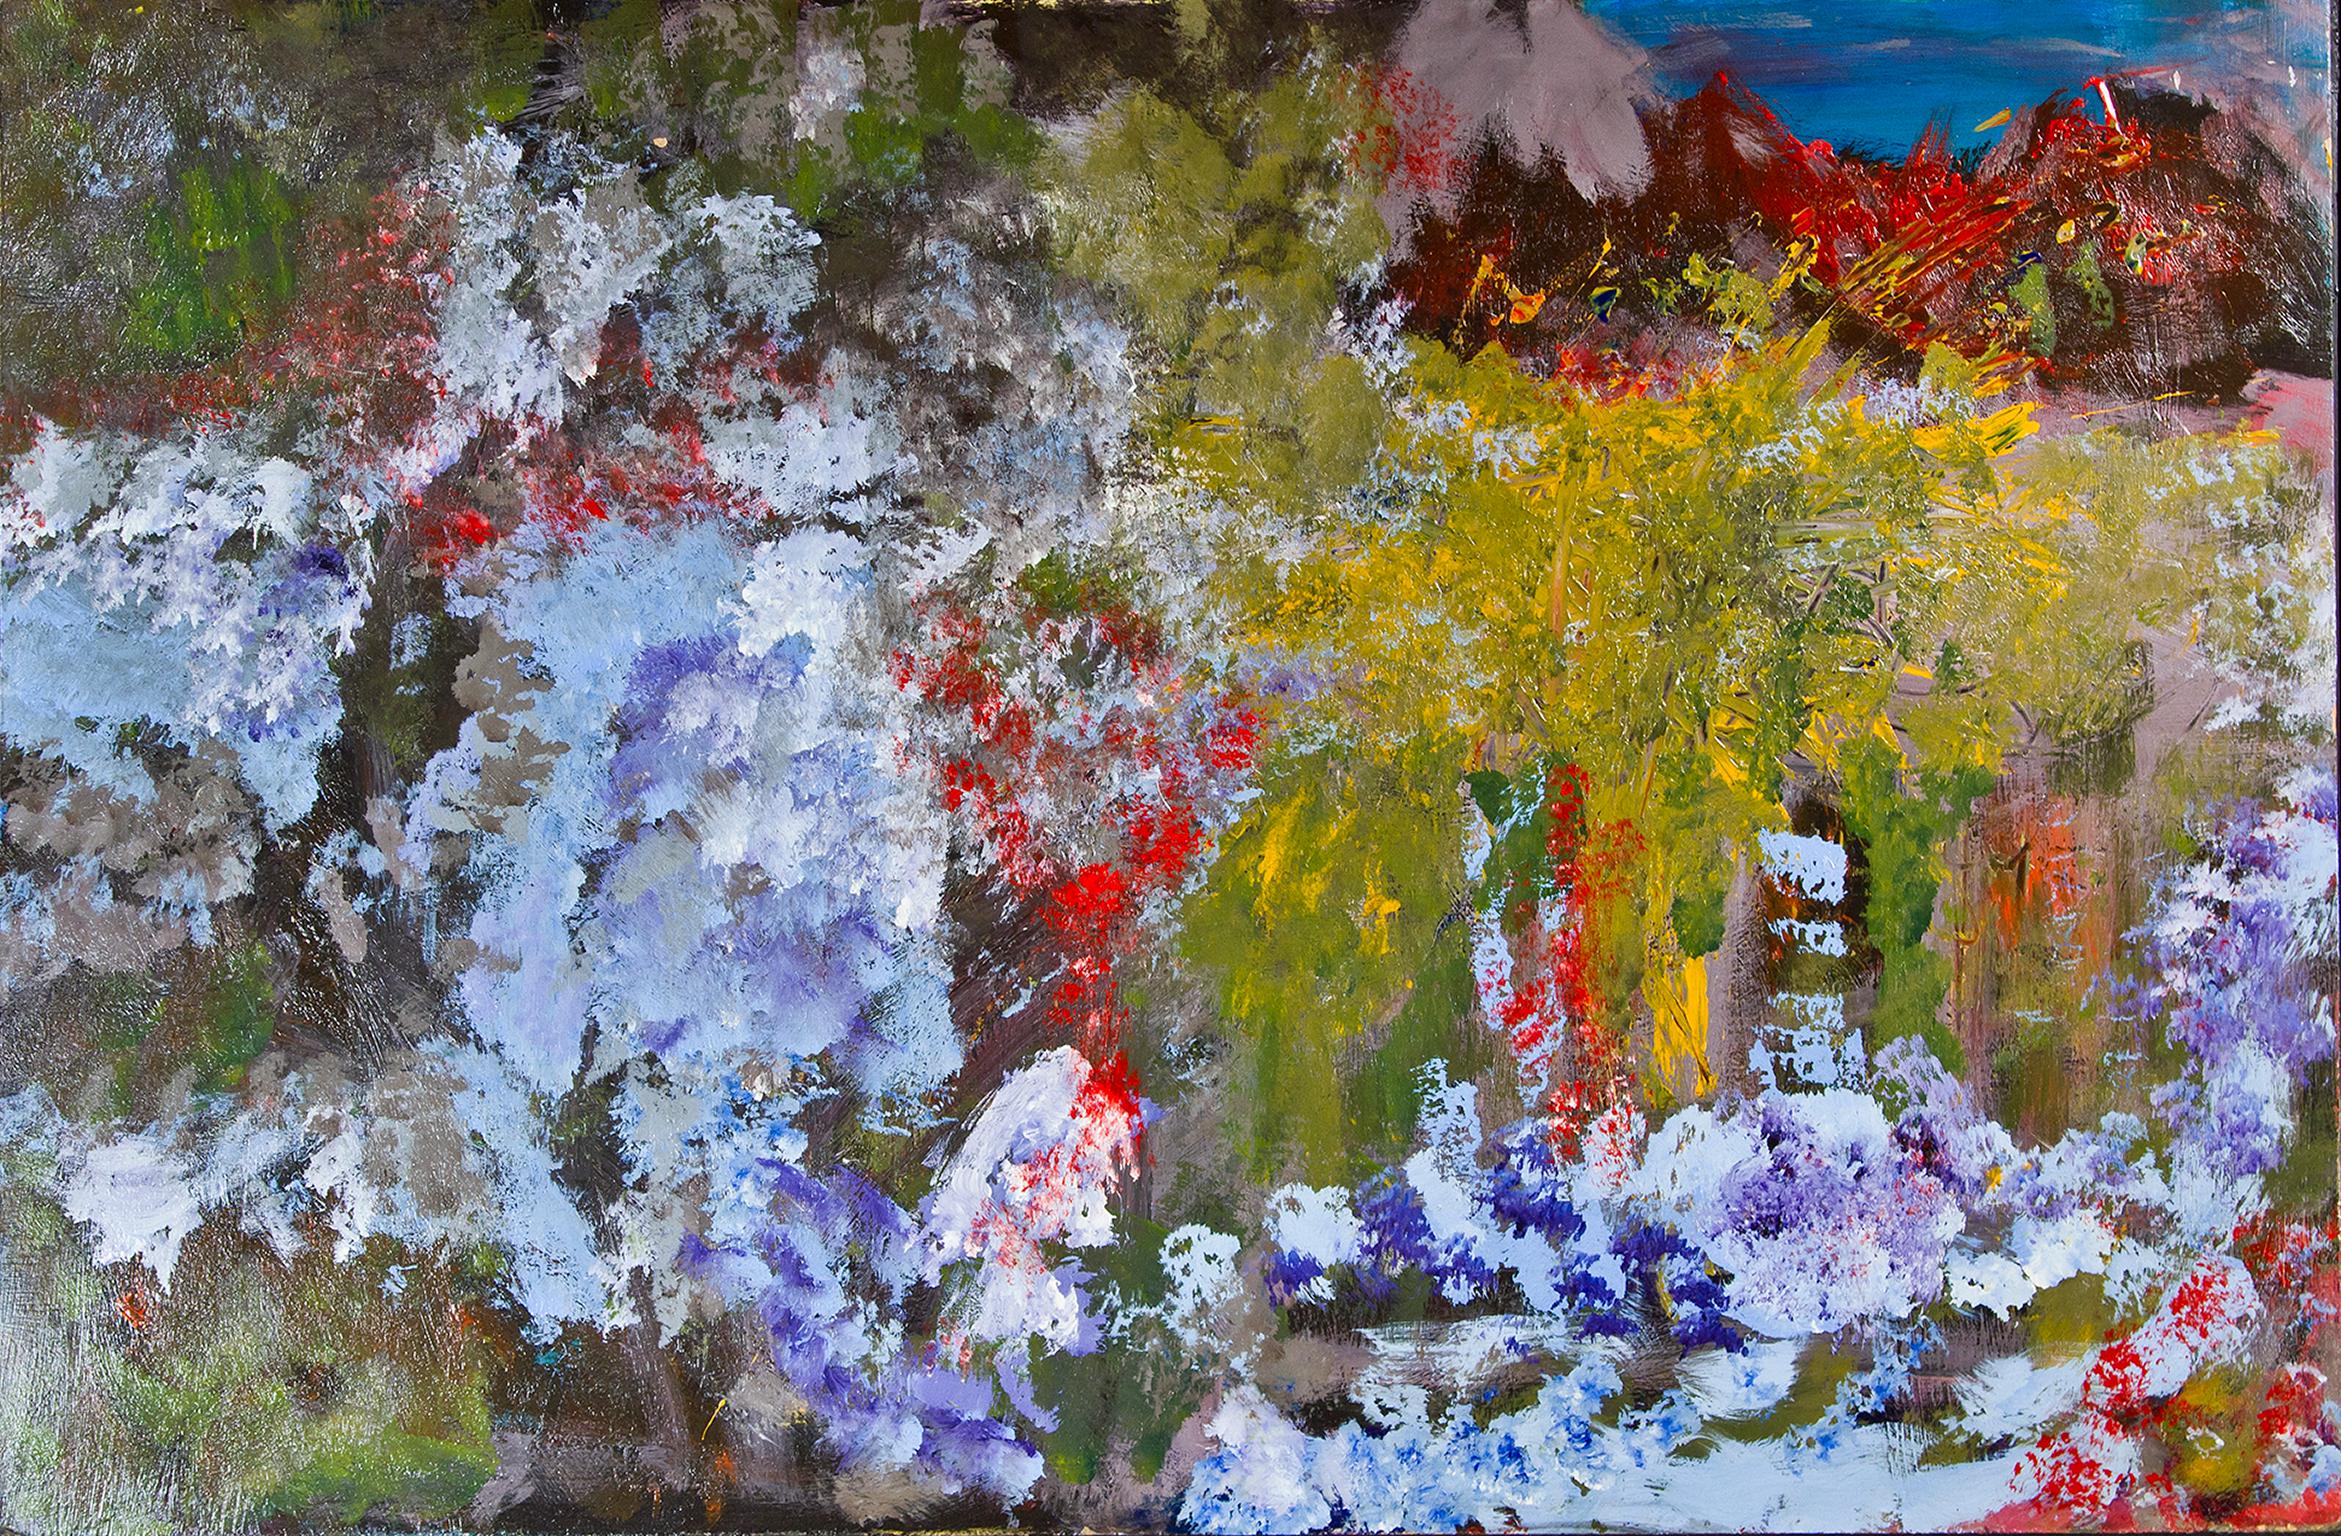 "Waterfall in the Forest", Paysage abstrait original signé par David Barnett